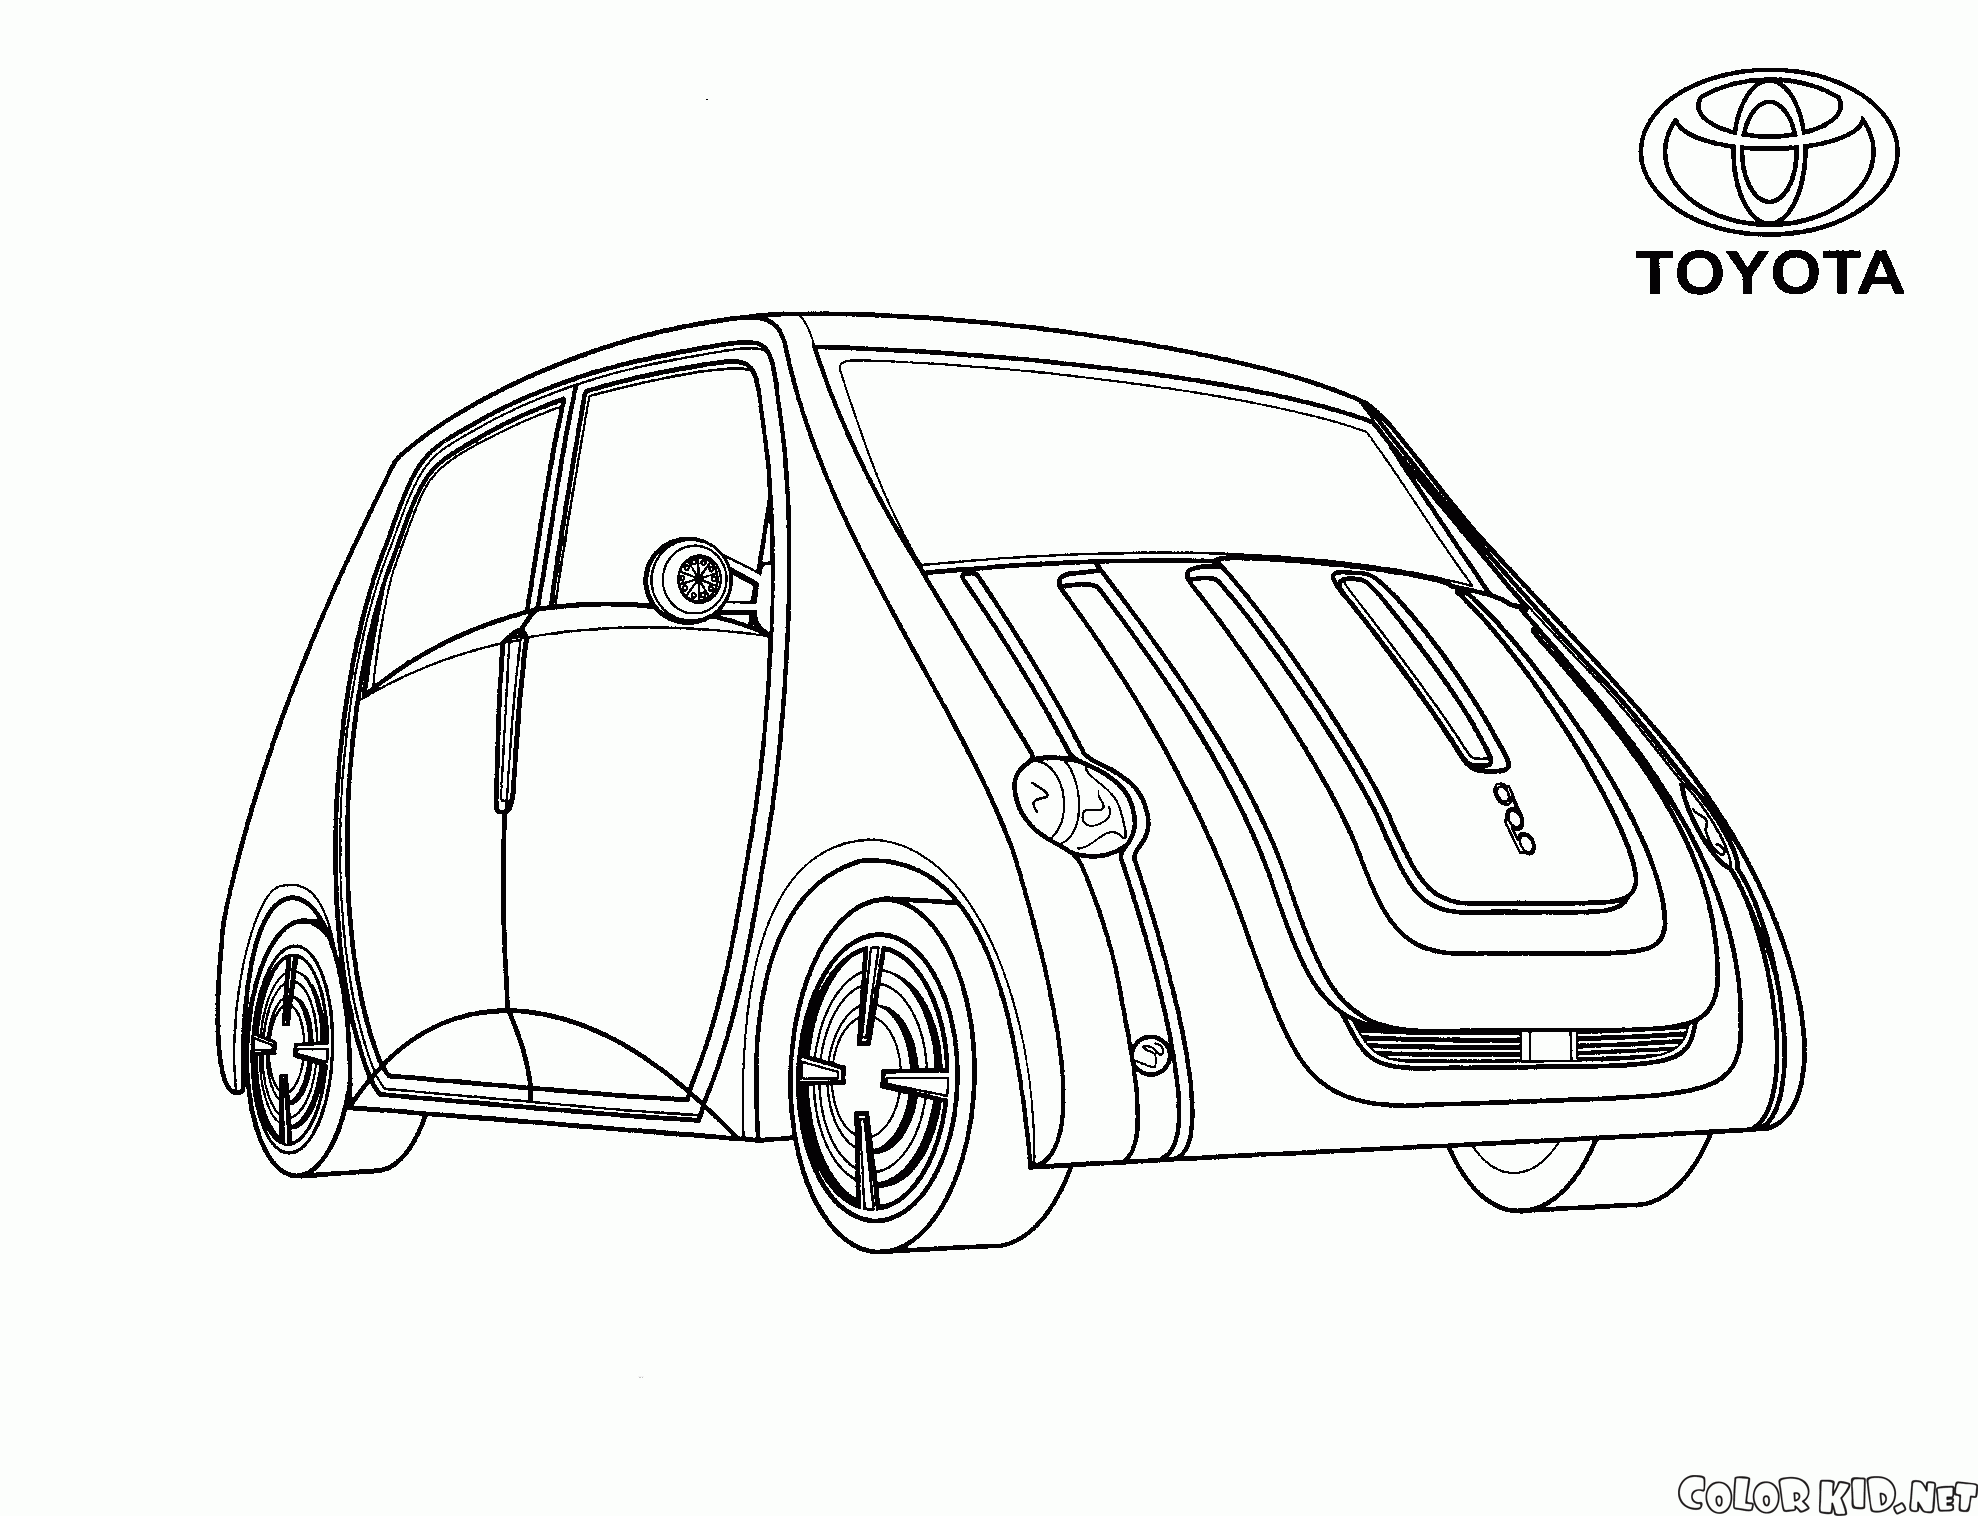 Coloring page - Japanese mini-van